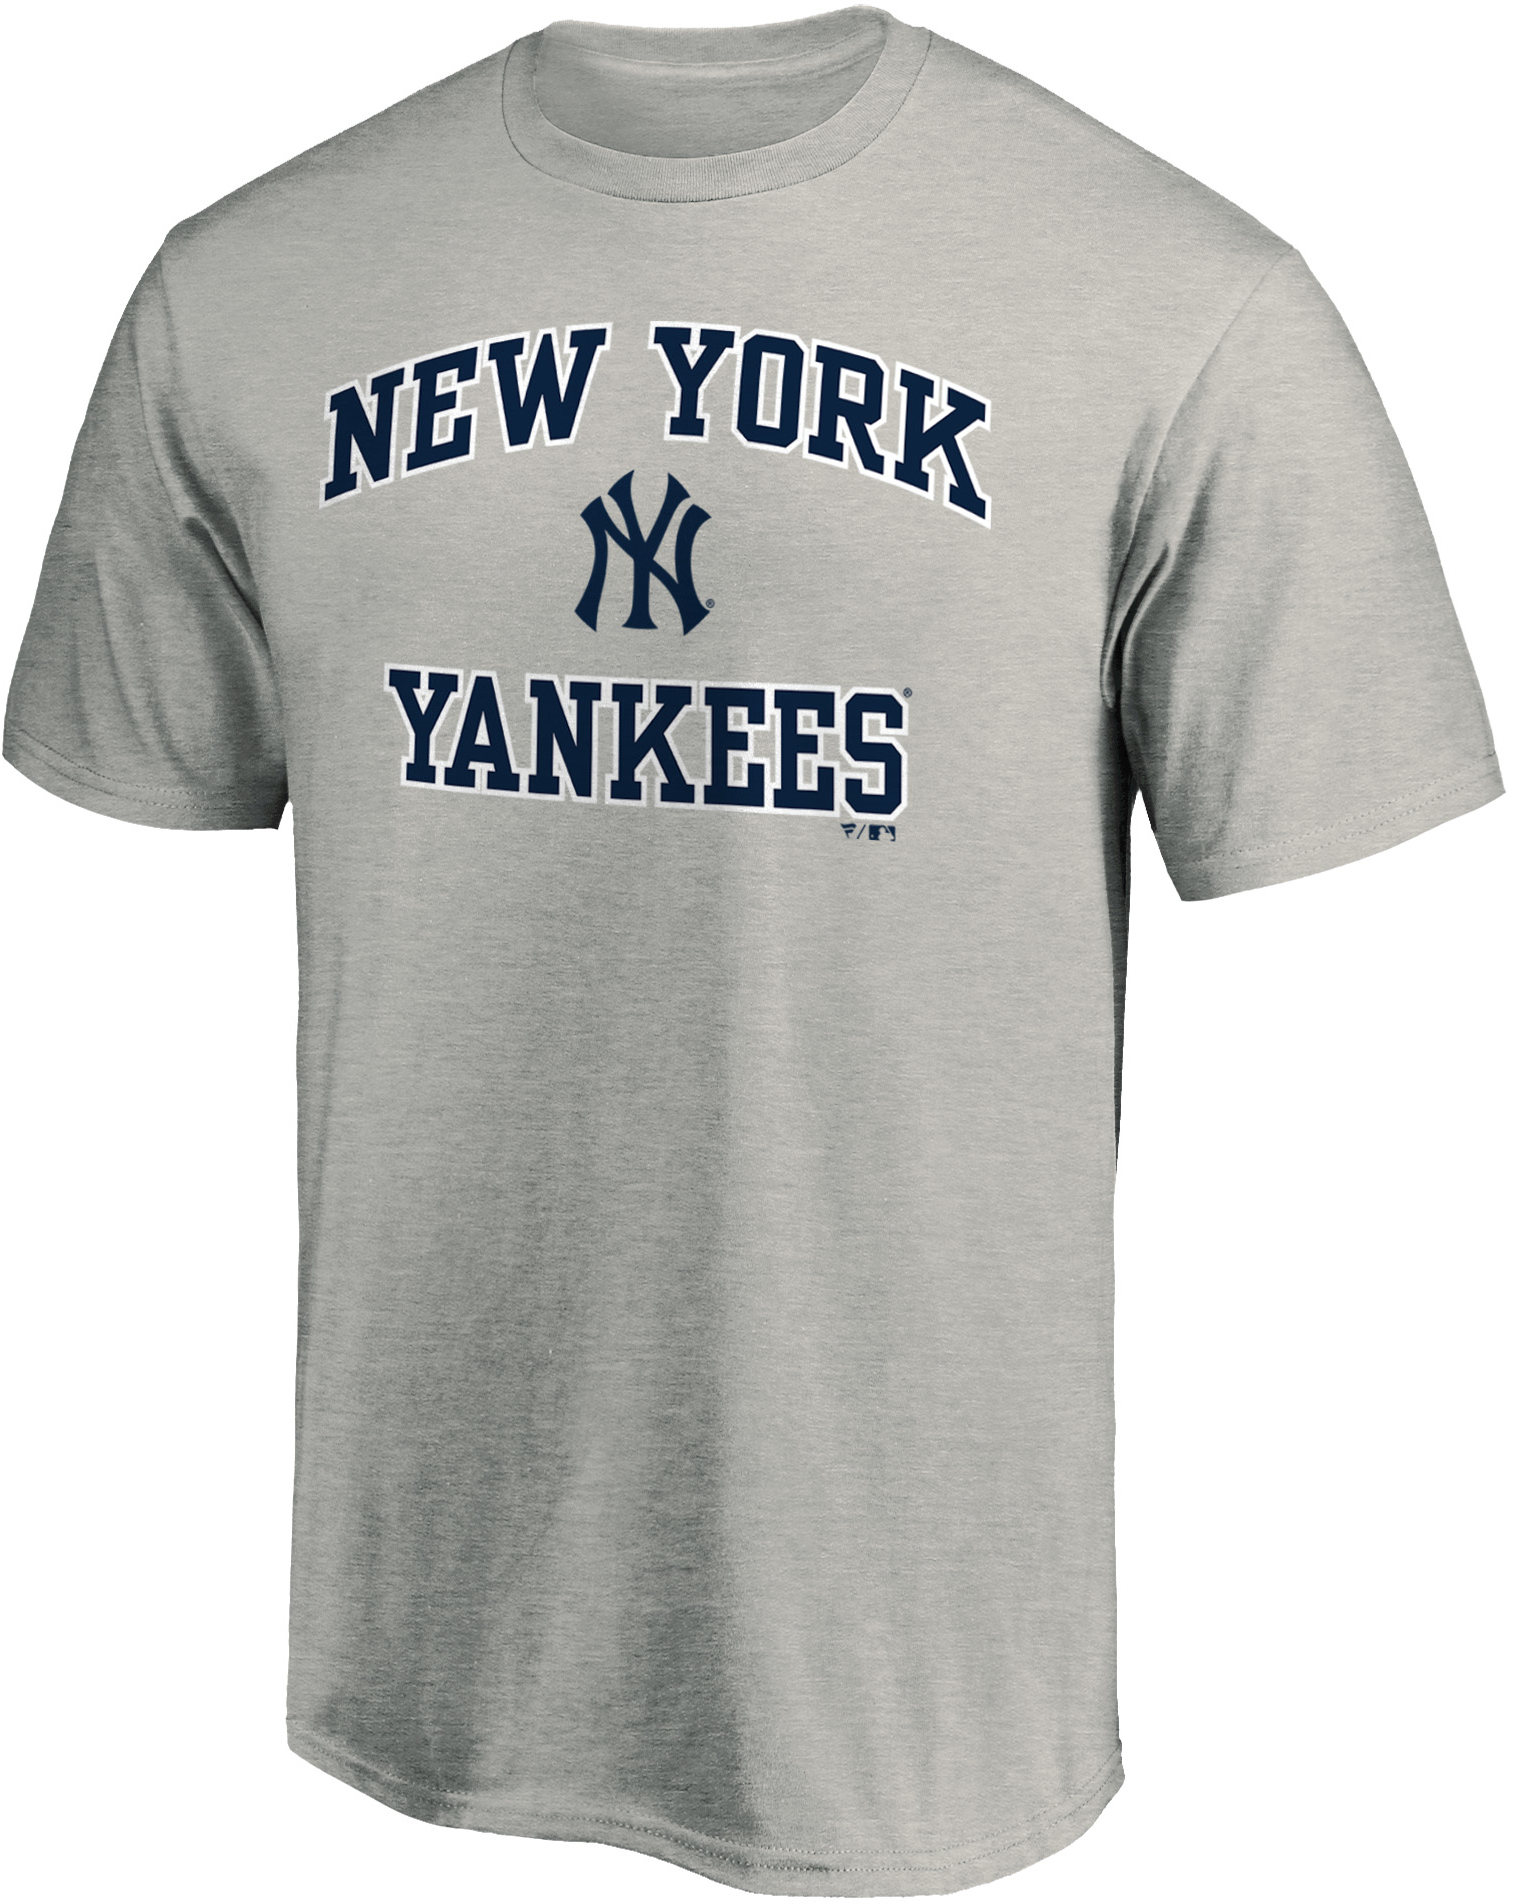 Men's Fanatics Branded Navy New York Yankees Team Front Line Long Sleeve  T-Shirt